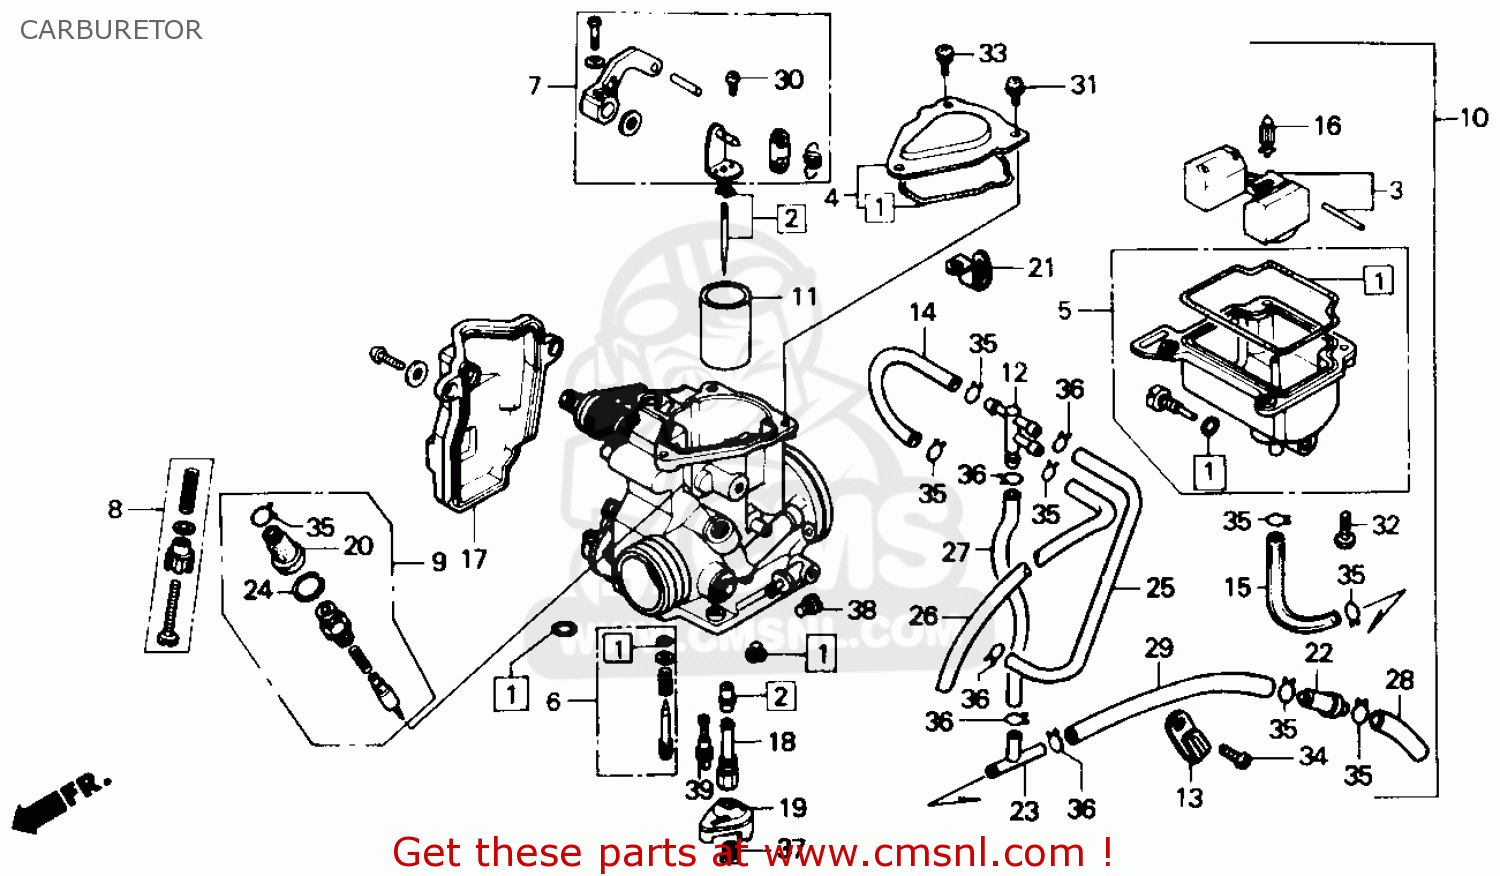 1986 Honda trx200sx wiring diagram #5